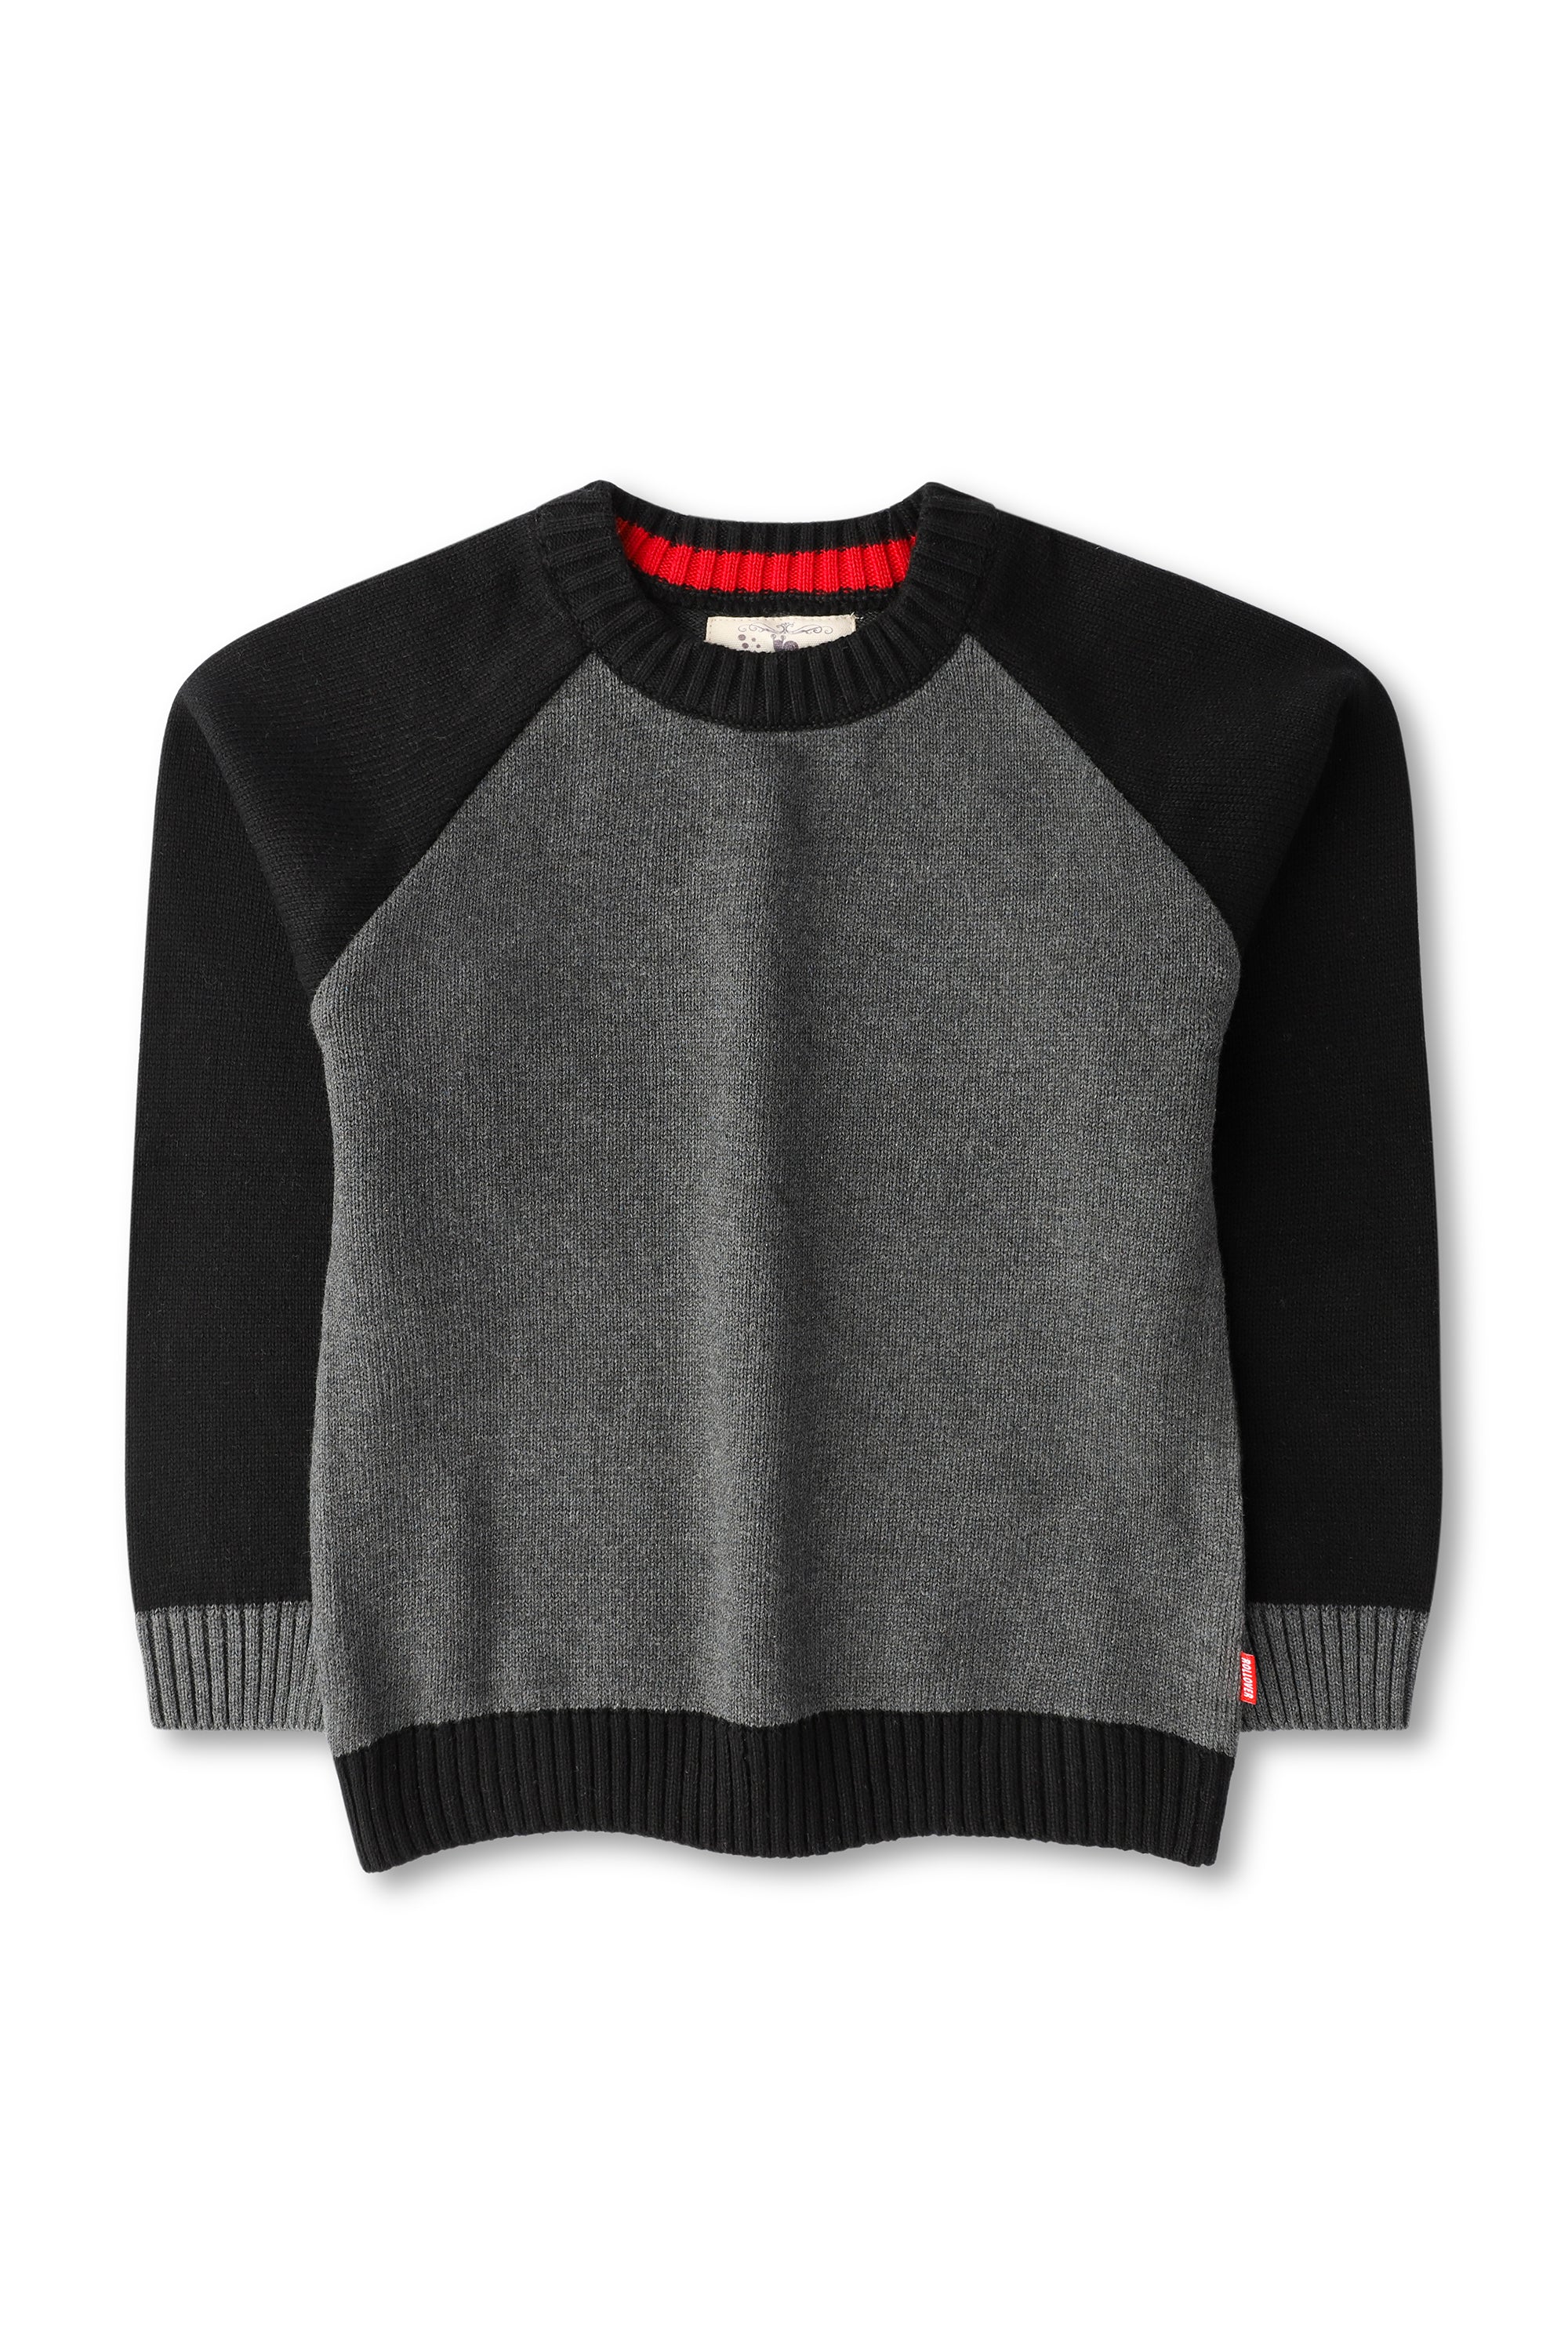 Boys Black & Grey Sweater